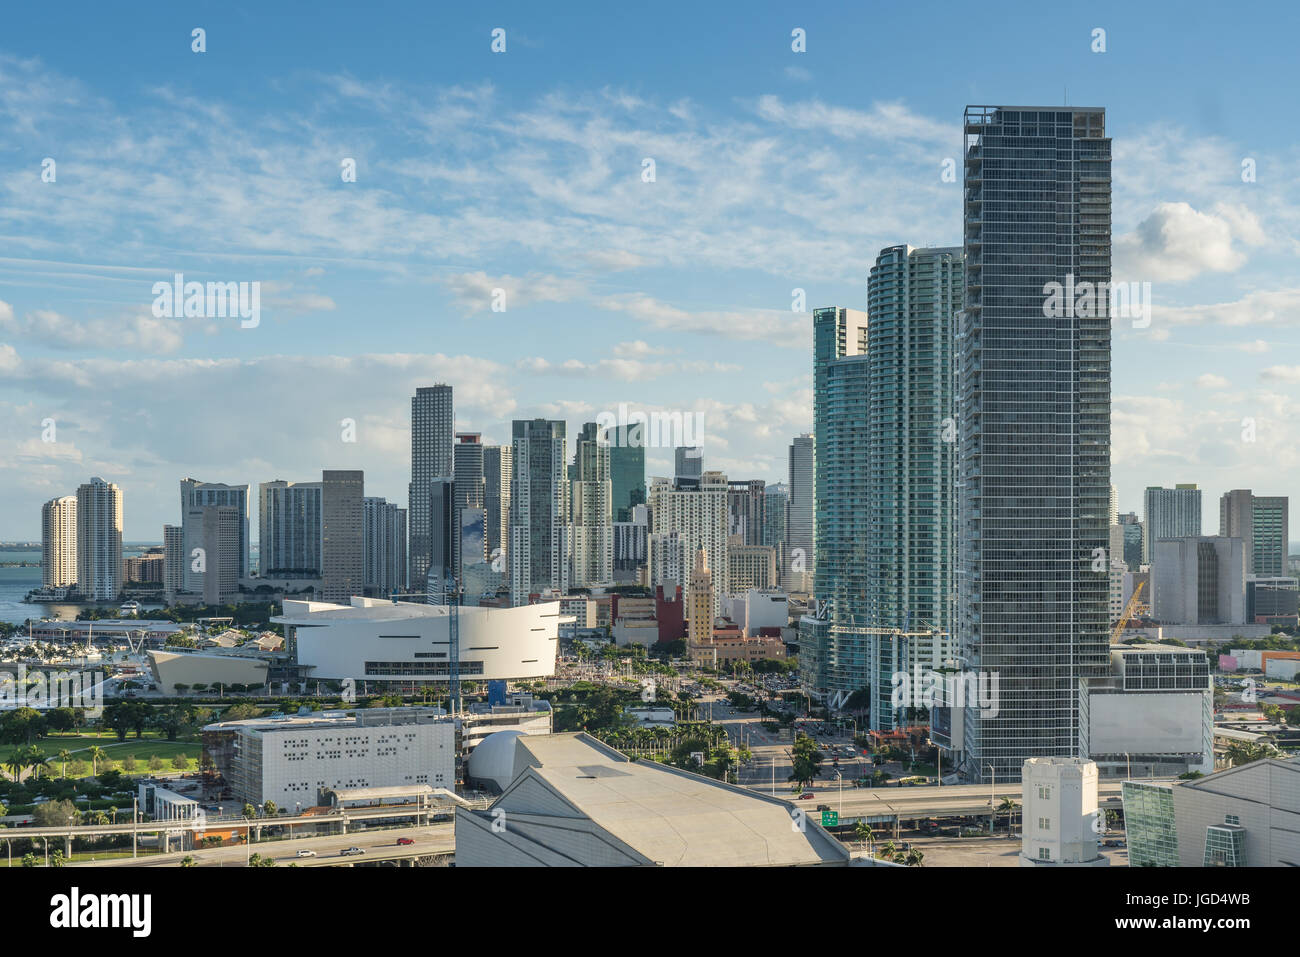 Miami, Florida city skyline looking south. Stock Photo